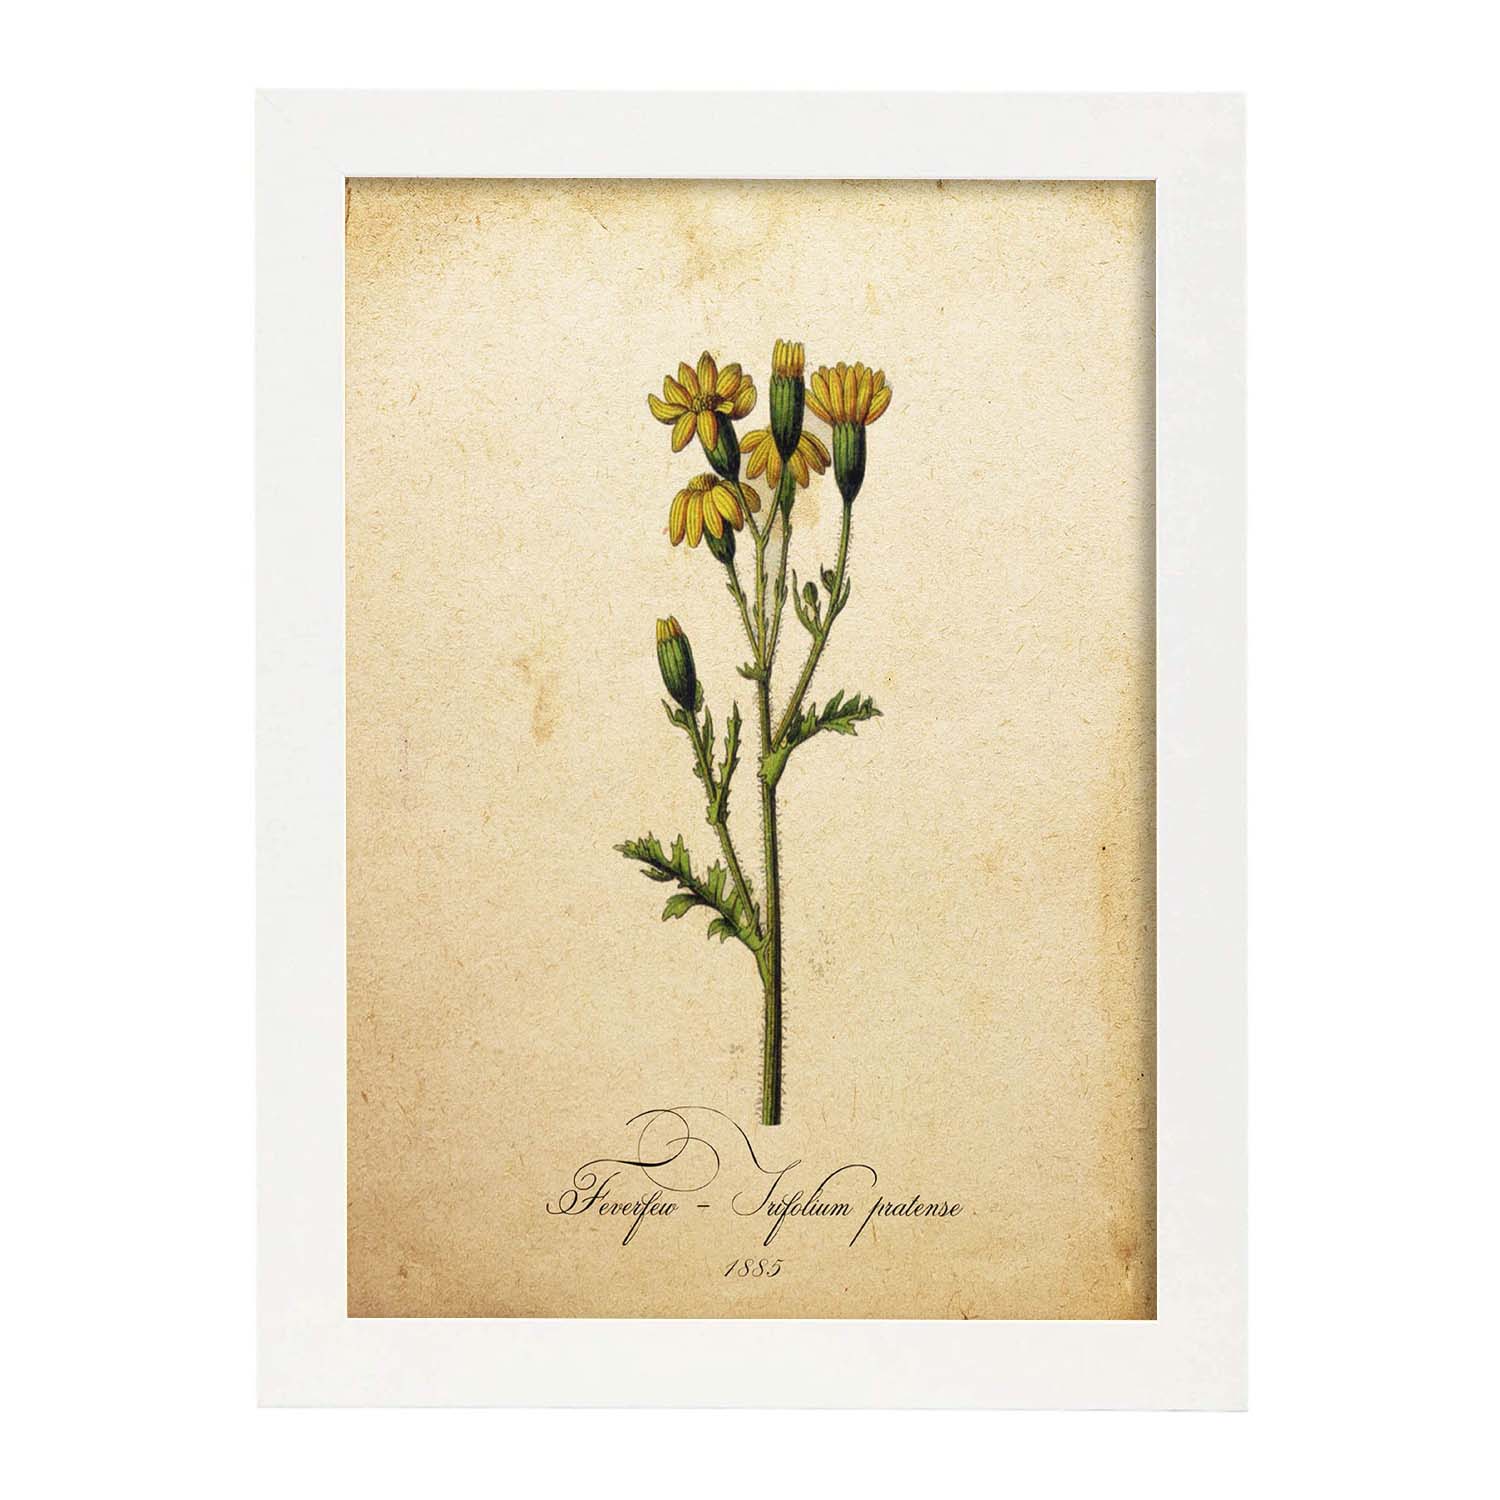 Poster de flores vintage. Lámina Trifolium pratense con diseño vintage.-Artwork-Nacnic-A4-Marco Blanco-Nacnic Estudio SL